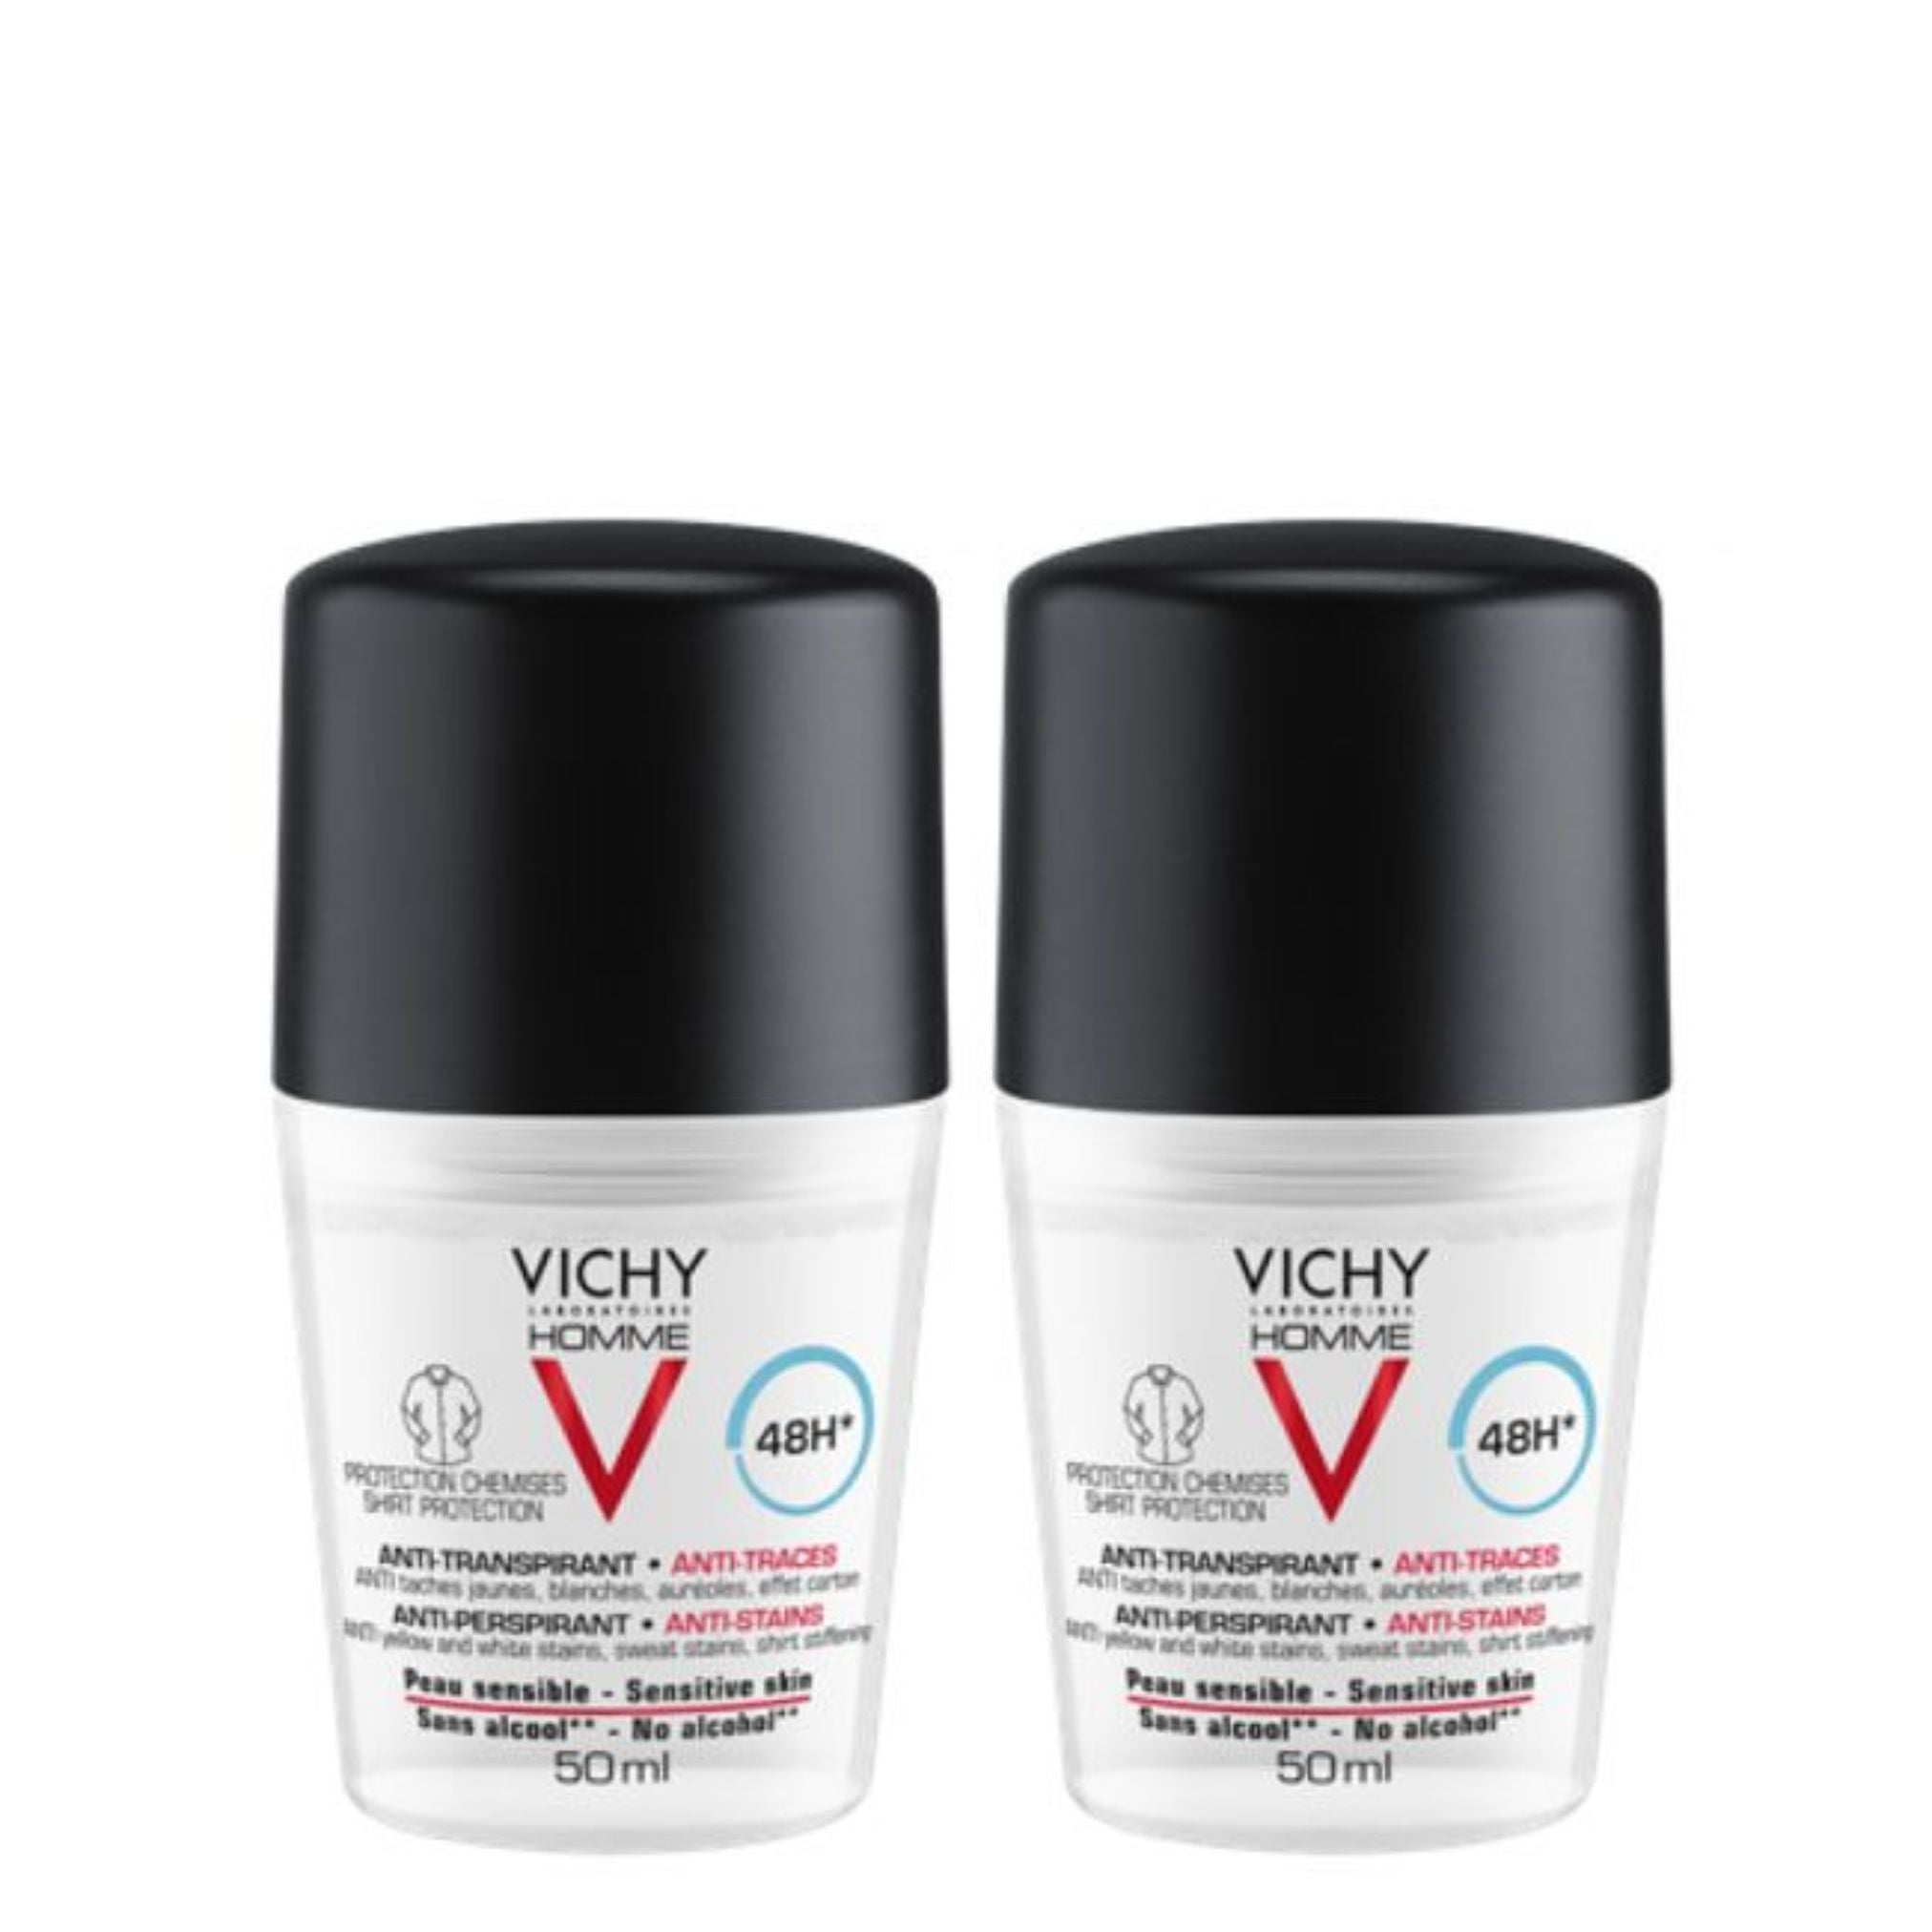 Vichy Pack Promocional: Vichy Homme Desodorizante Anti-Transpirante Anti-Manchas 48h 2x50ml